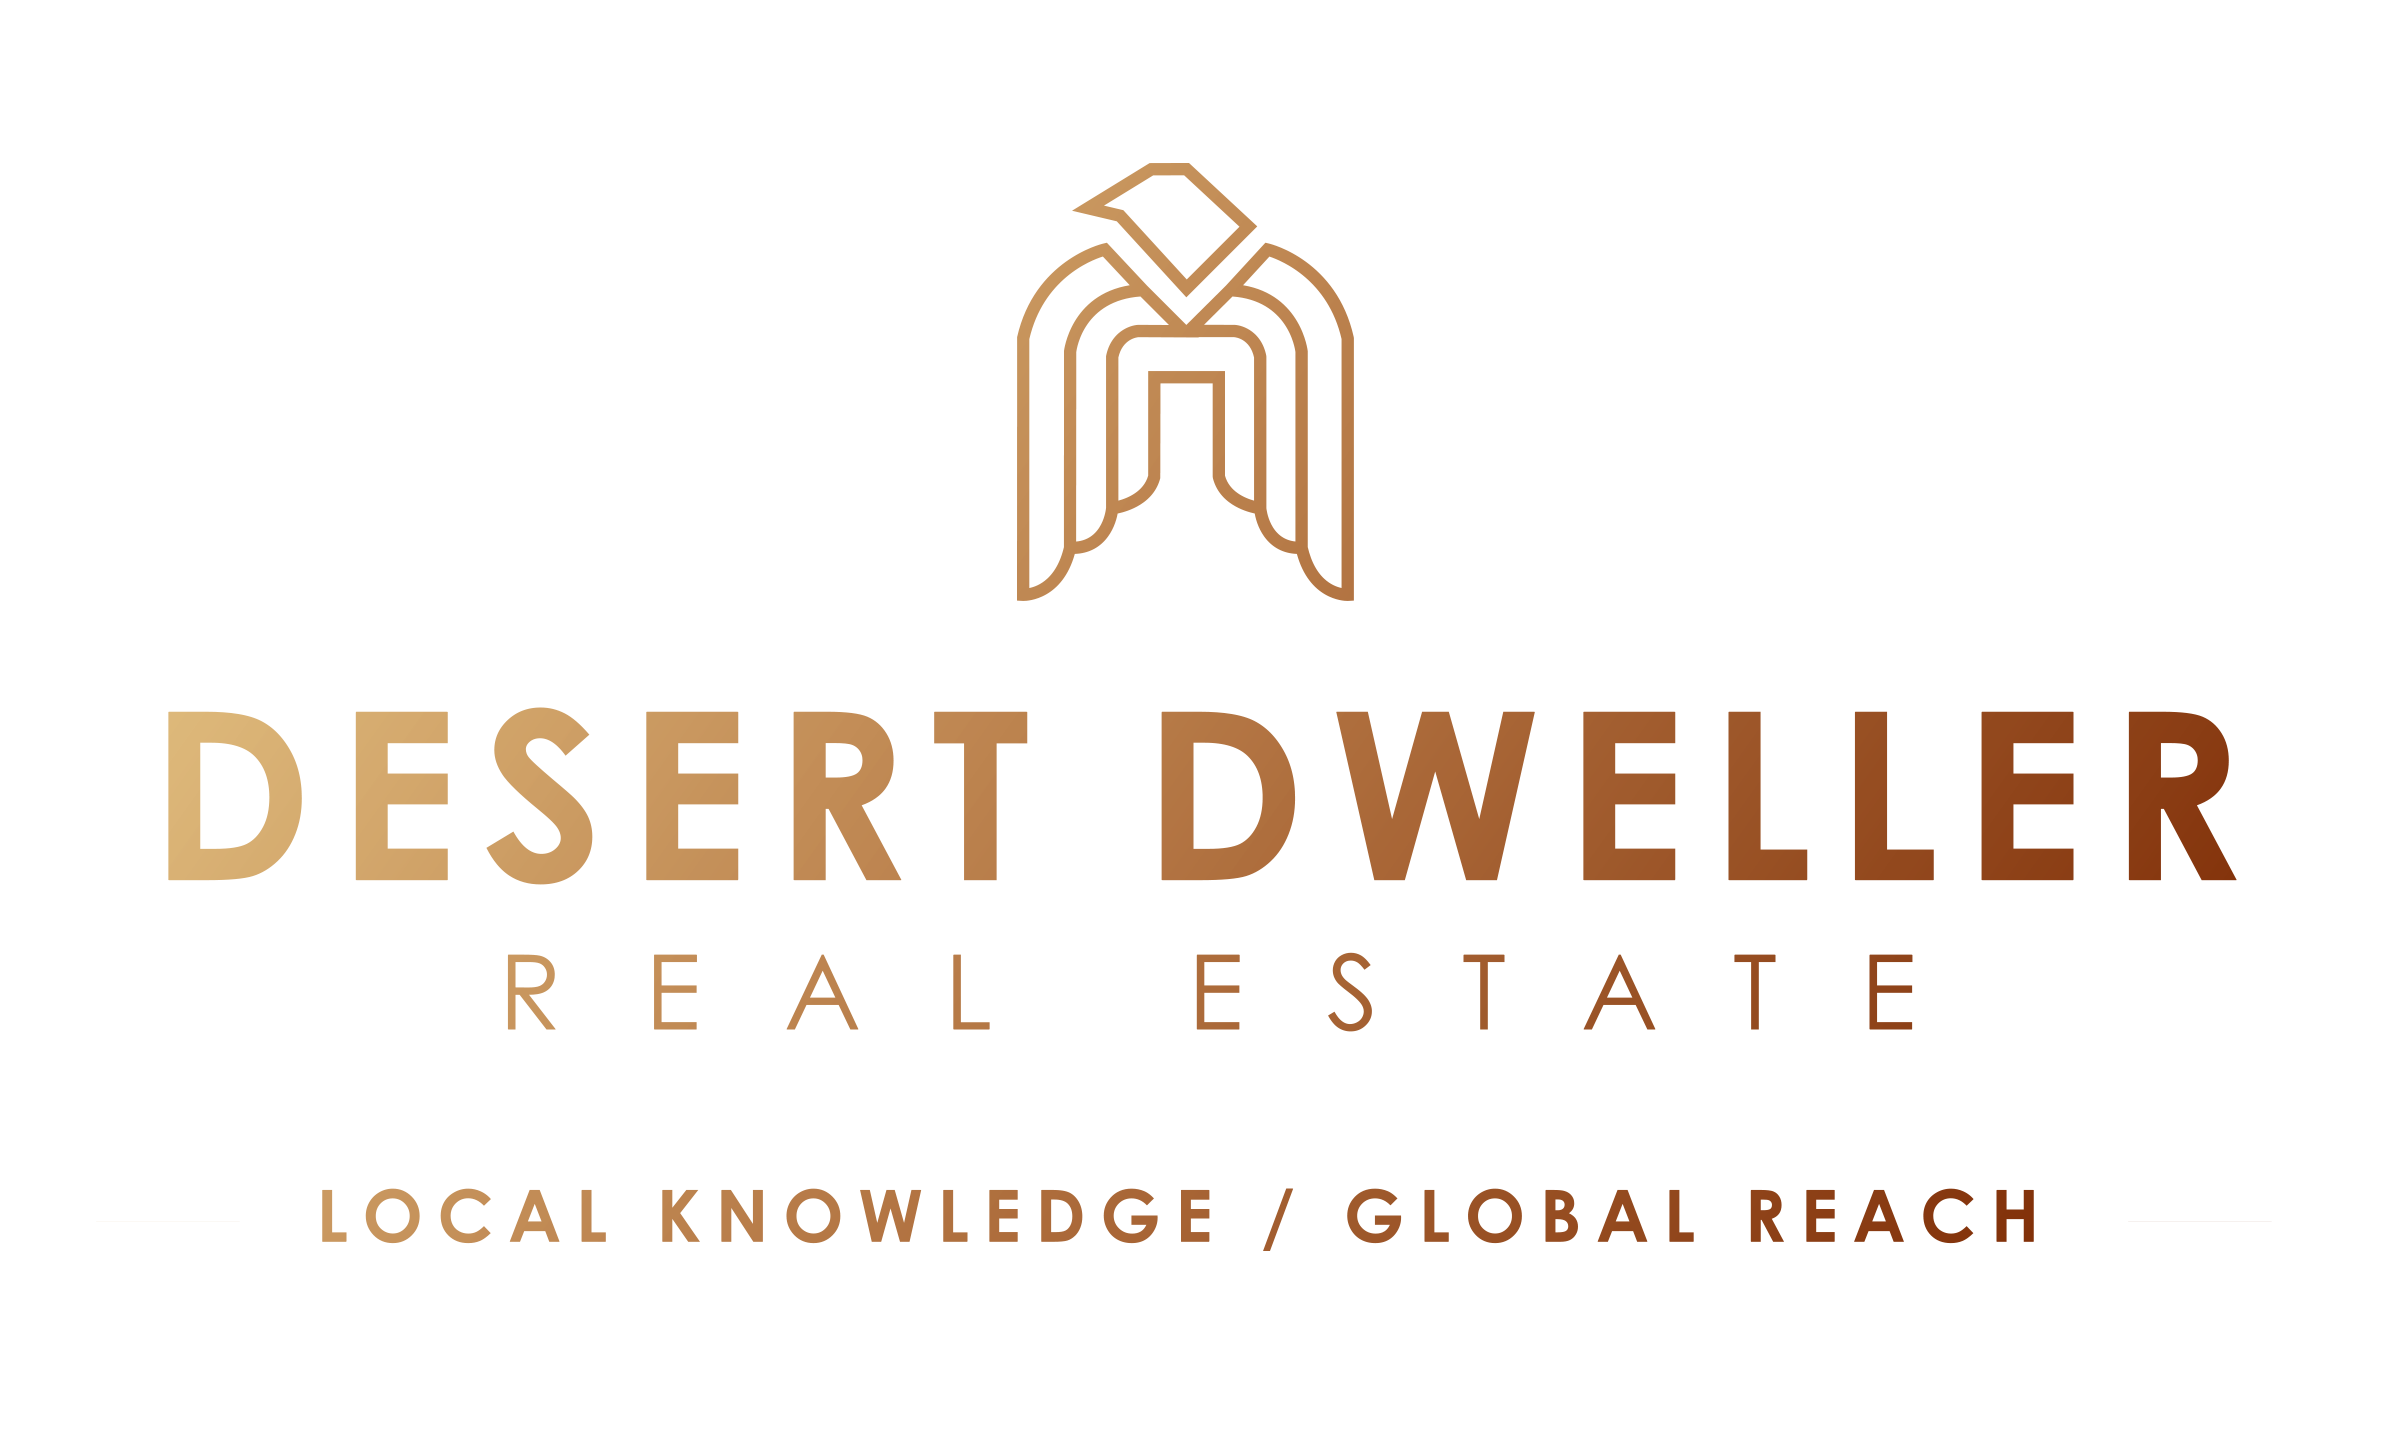 Desert Dweller Real Estate